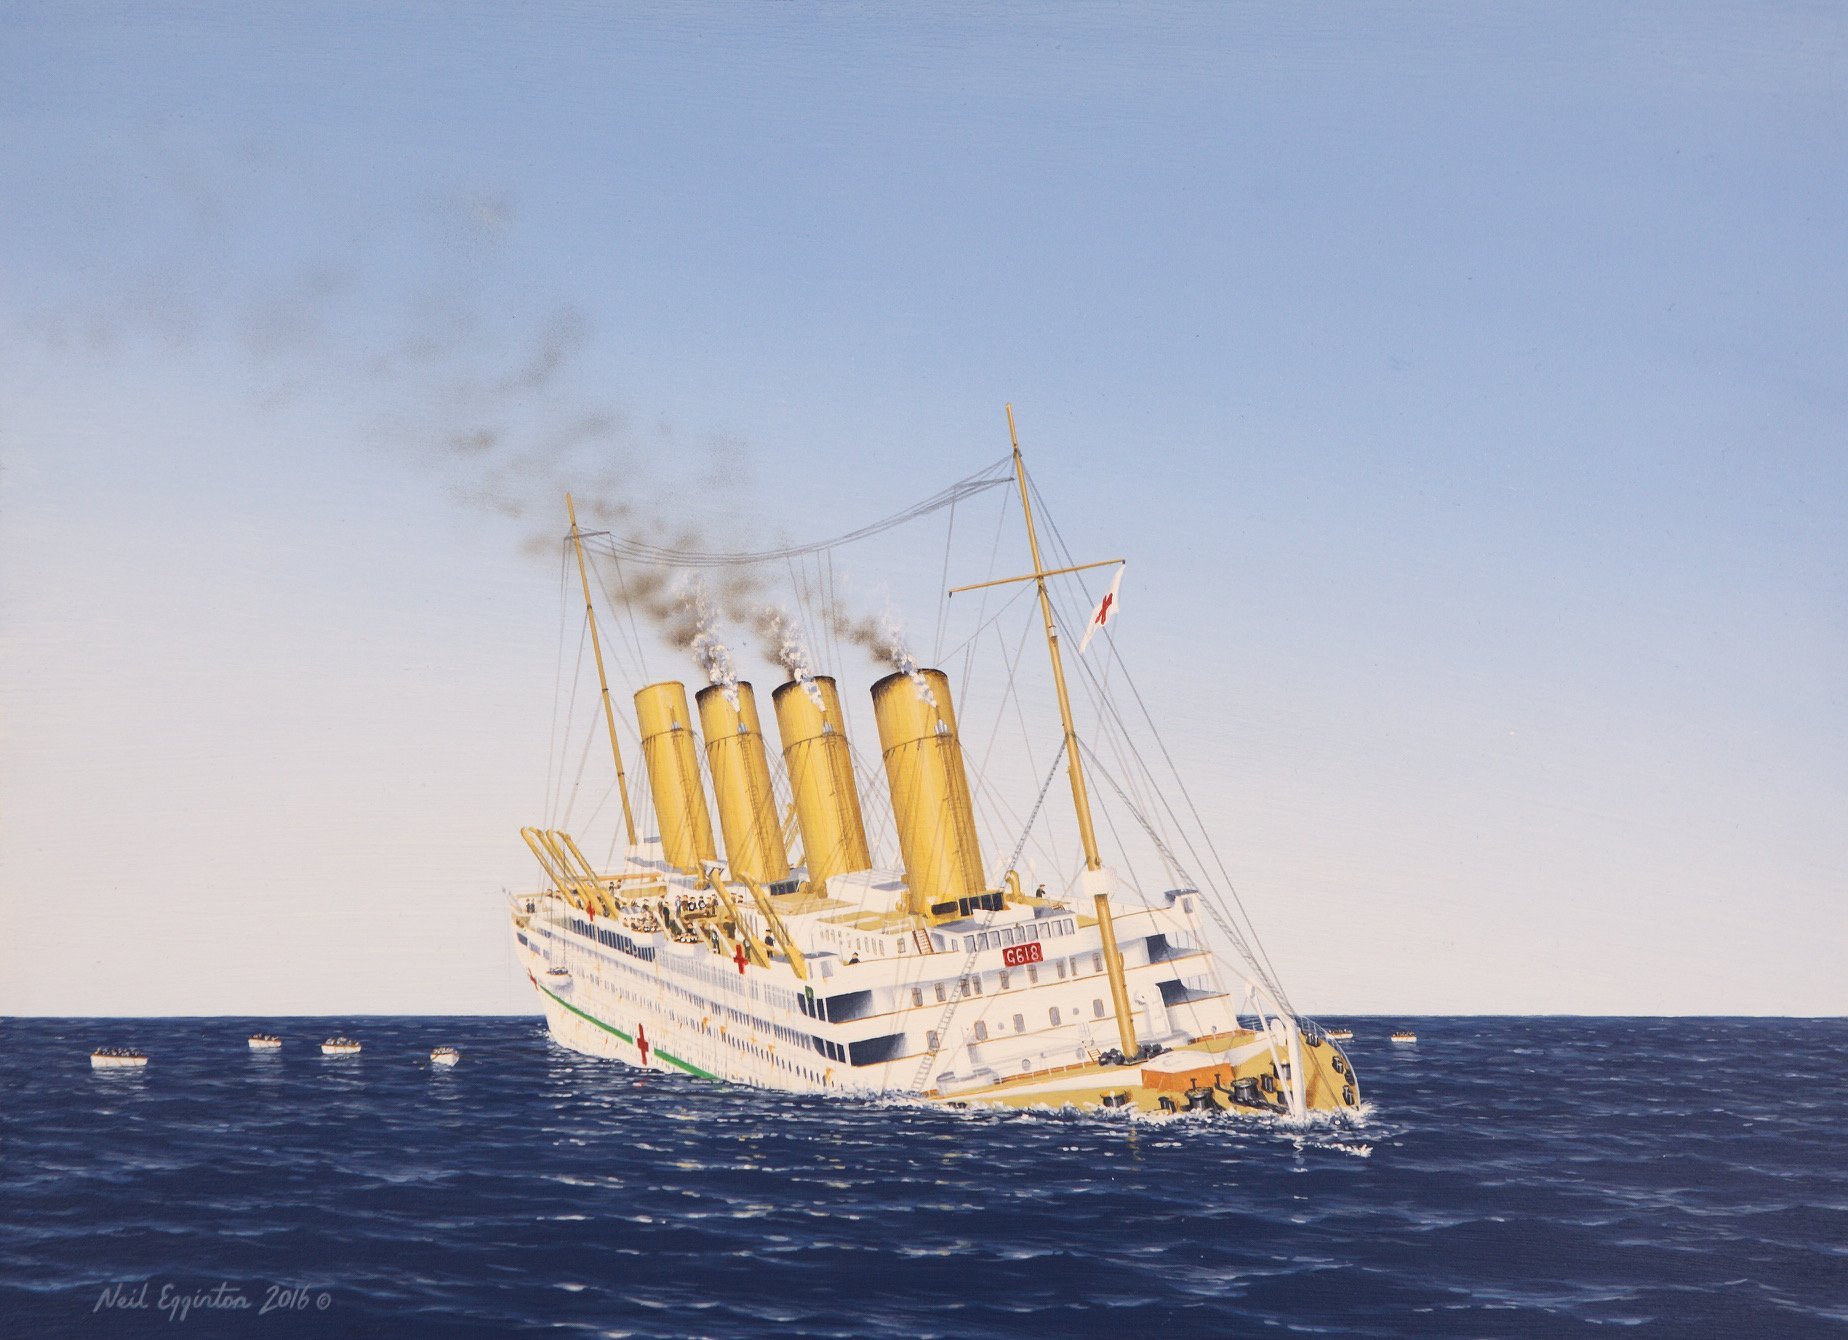 Картинки британика. HMHS Britannic. Британик корабль. Olympic, Британик, Титаник корабль. Британика корабль крушение.